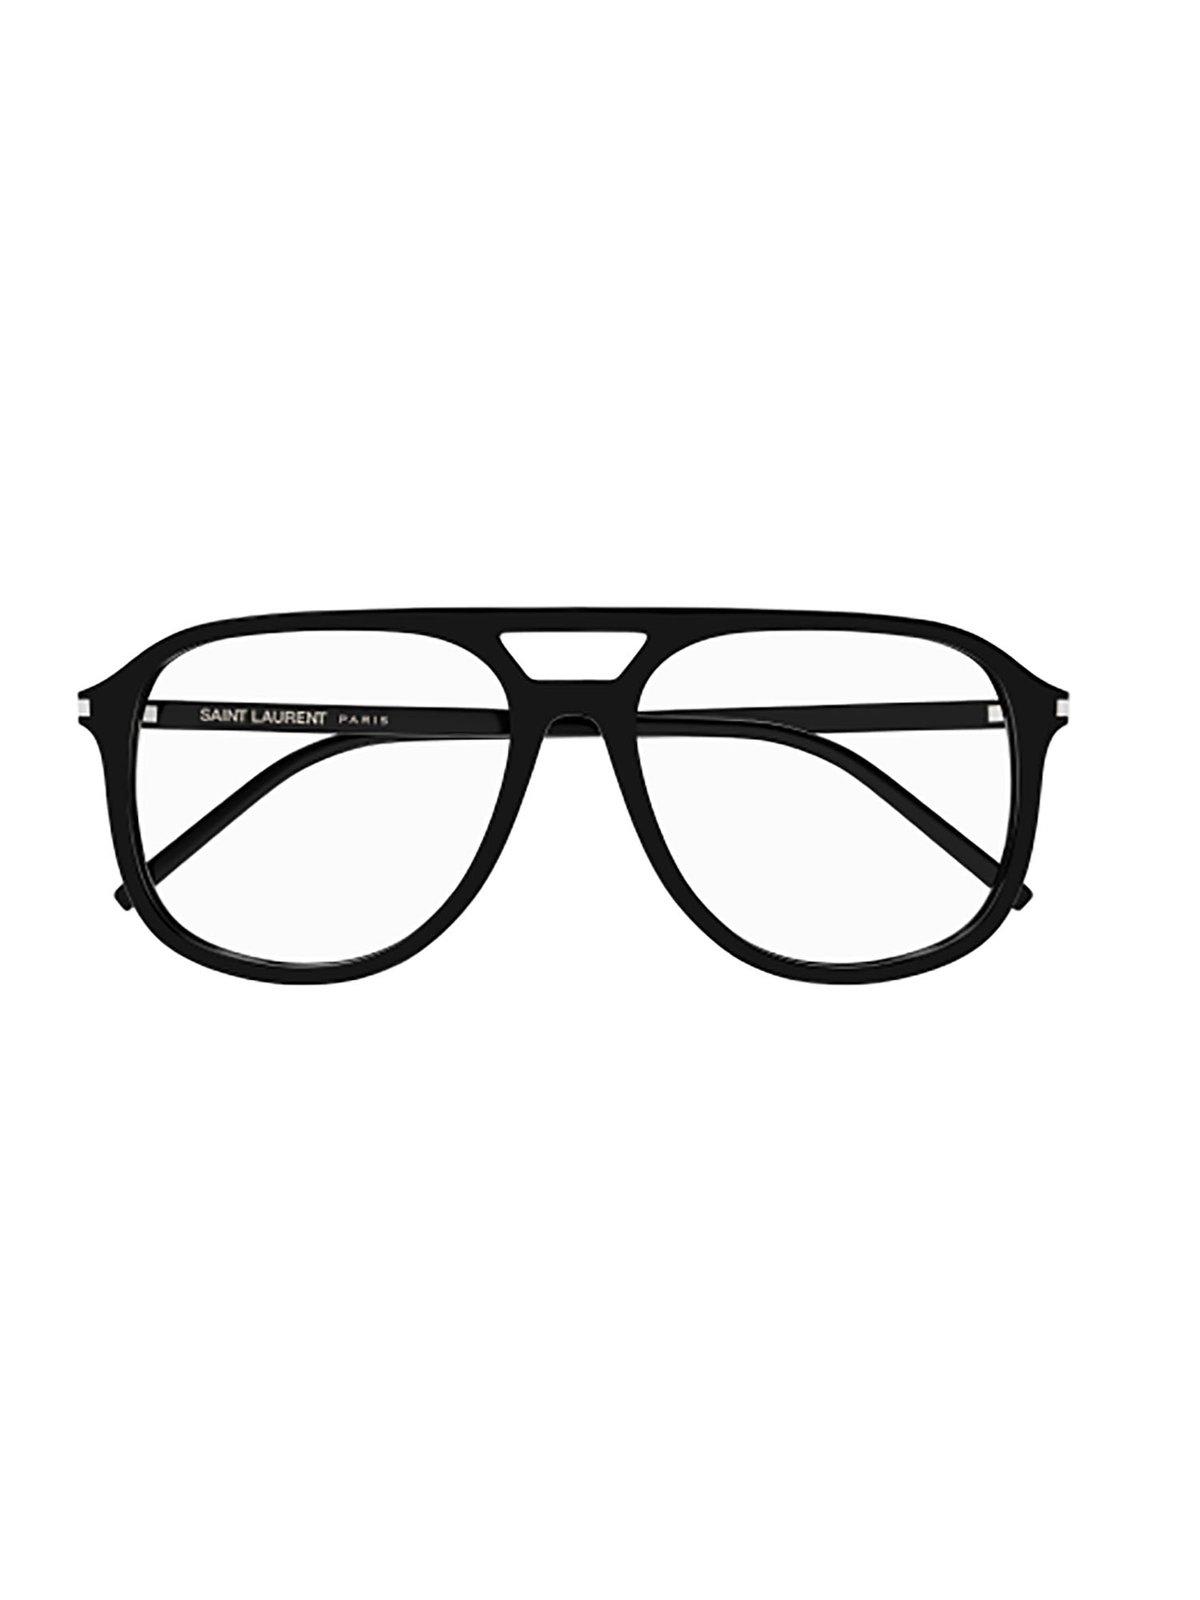 Saint Laurent Pilot Frame Glasses In 001 Black Black Transpare